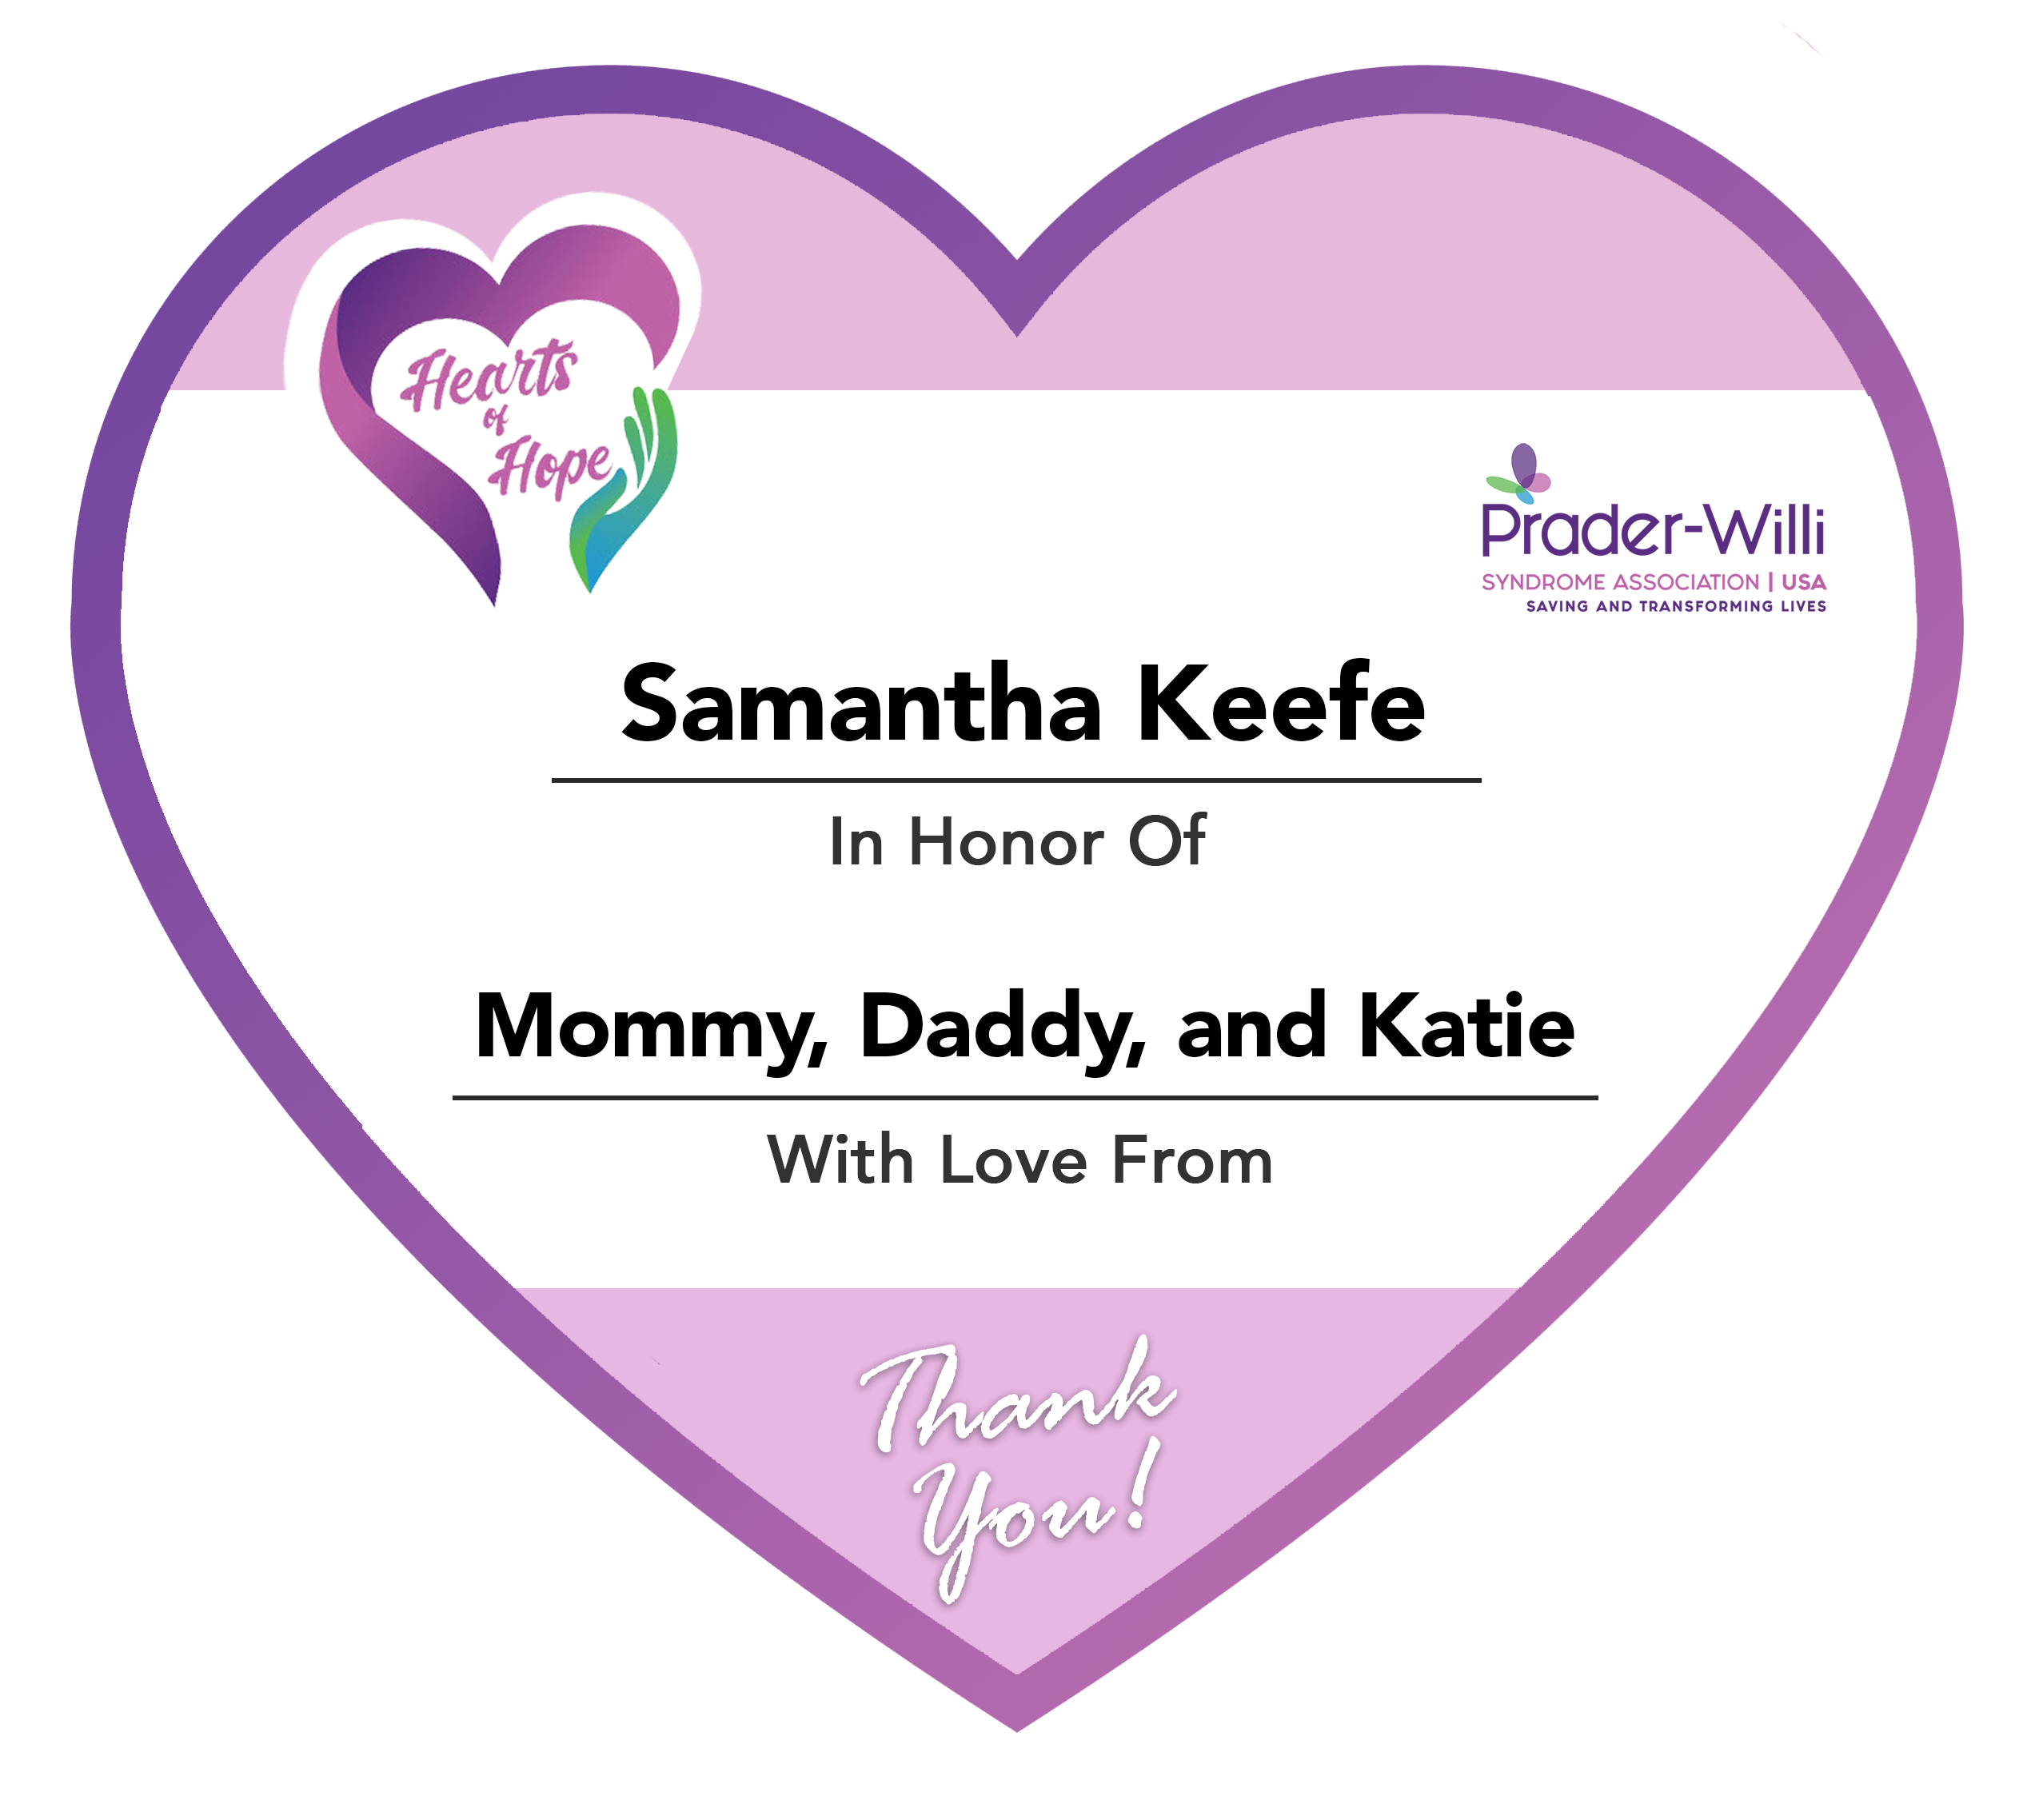 PWSA Paperheart SamanthaKeefe, Prader-Willi Syndrome Association | USA